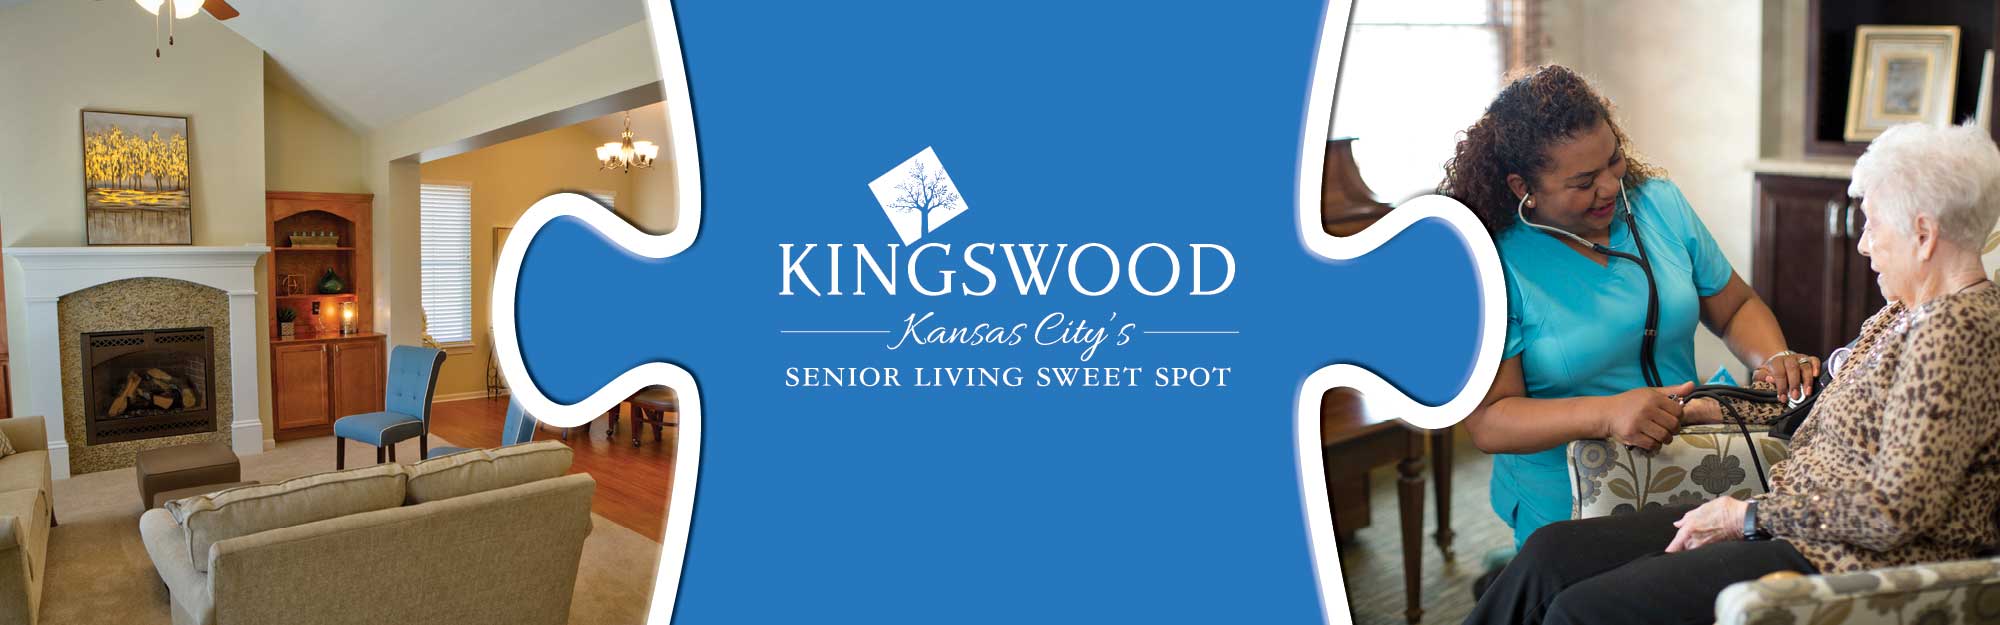 The logo of Kingswood Senior Living Located in Kansas City, MO.